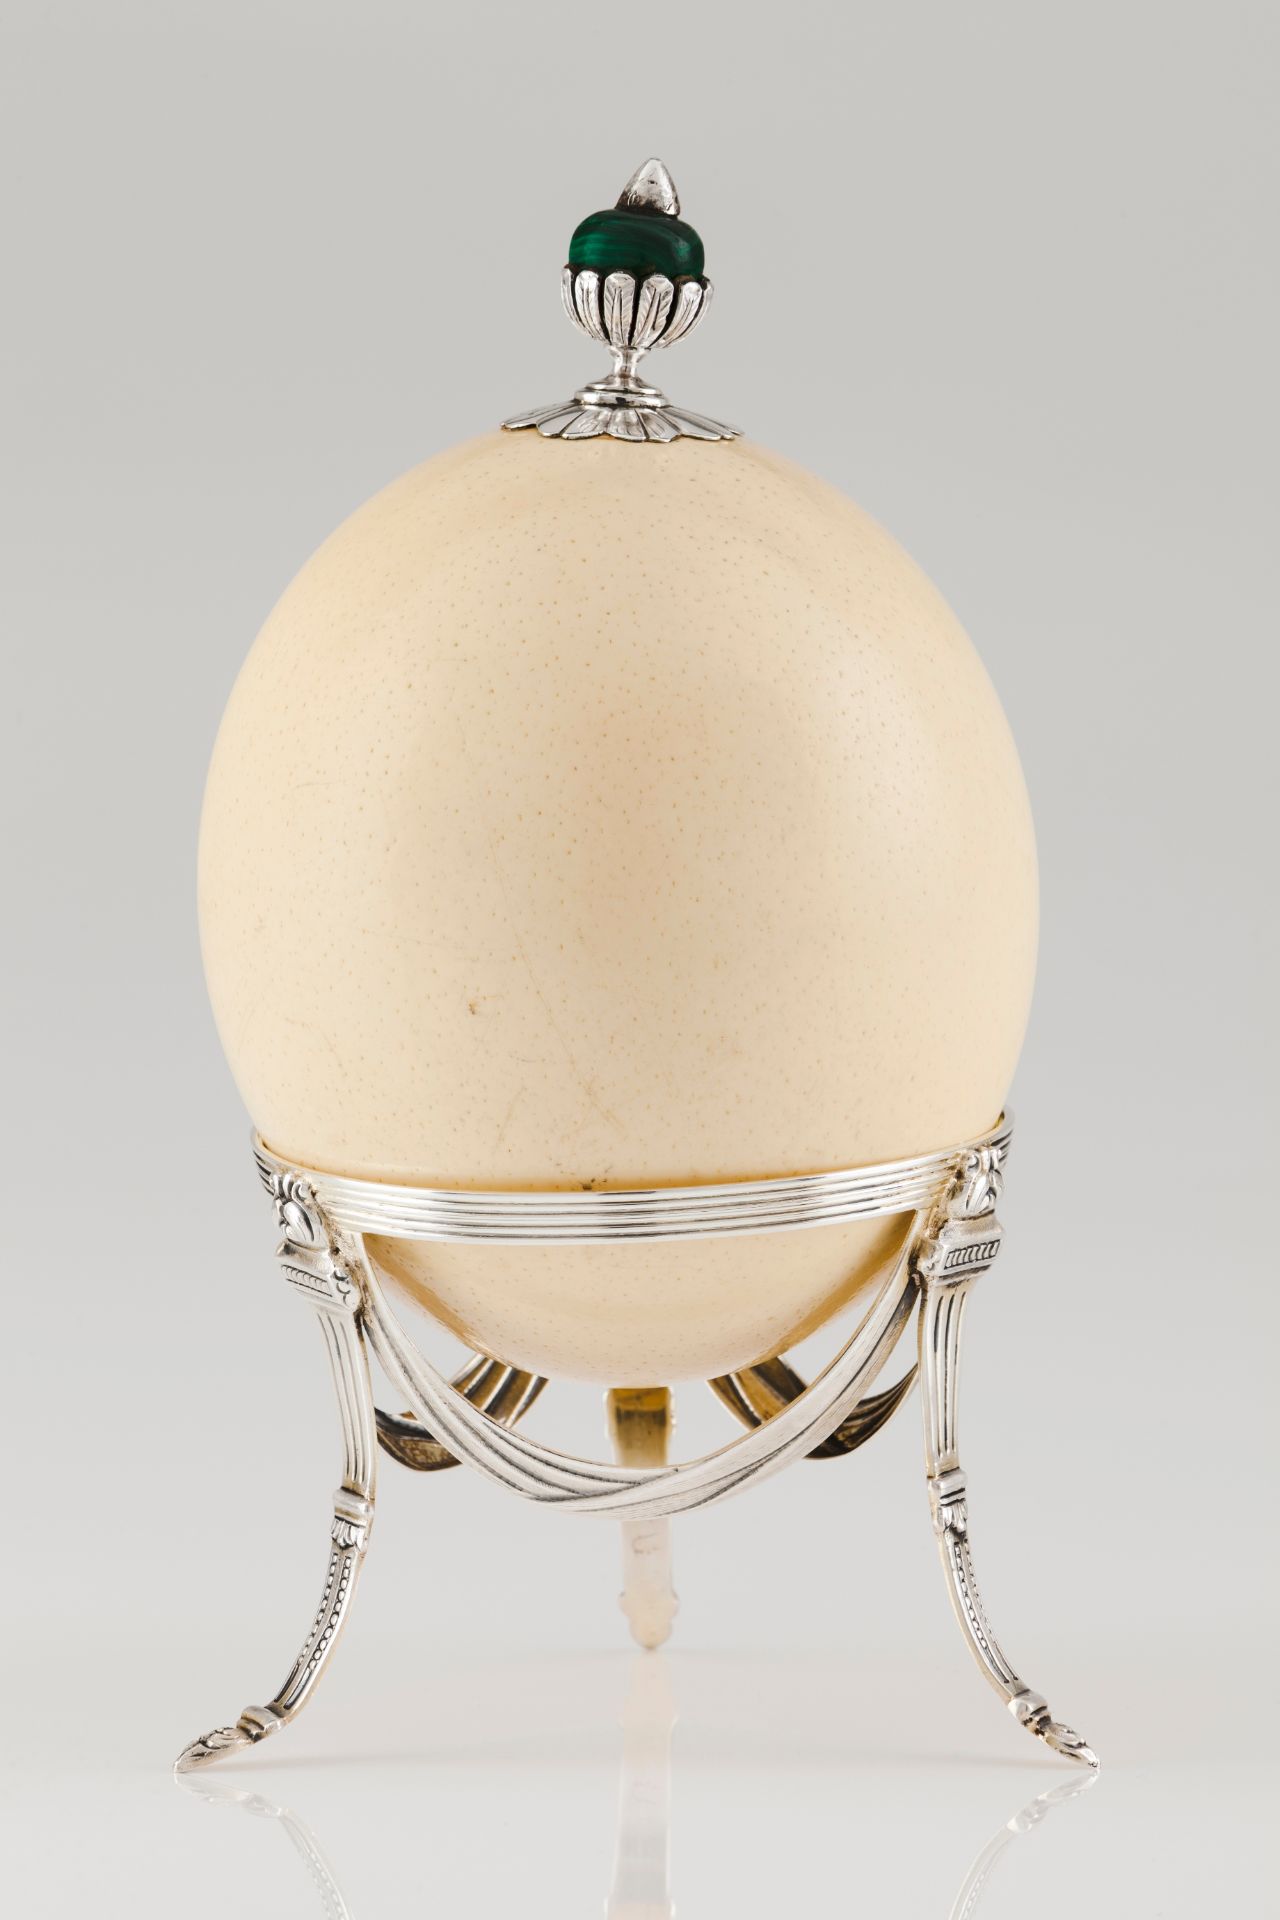 An ostrich eggPortuguese silver mount, Luiz FerreiraHeight:14,5 cm (total)